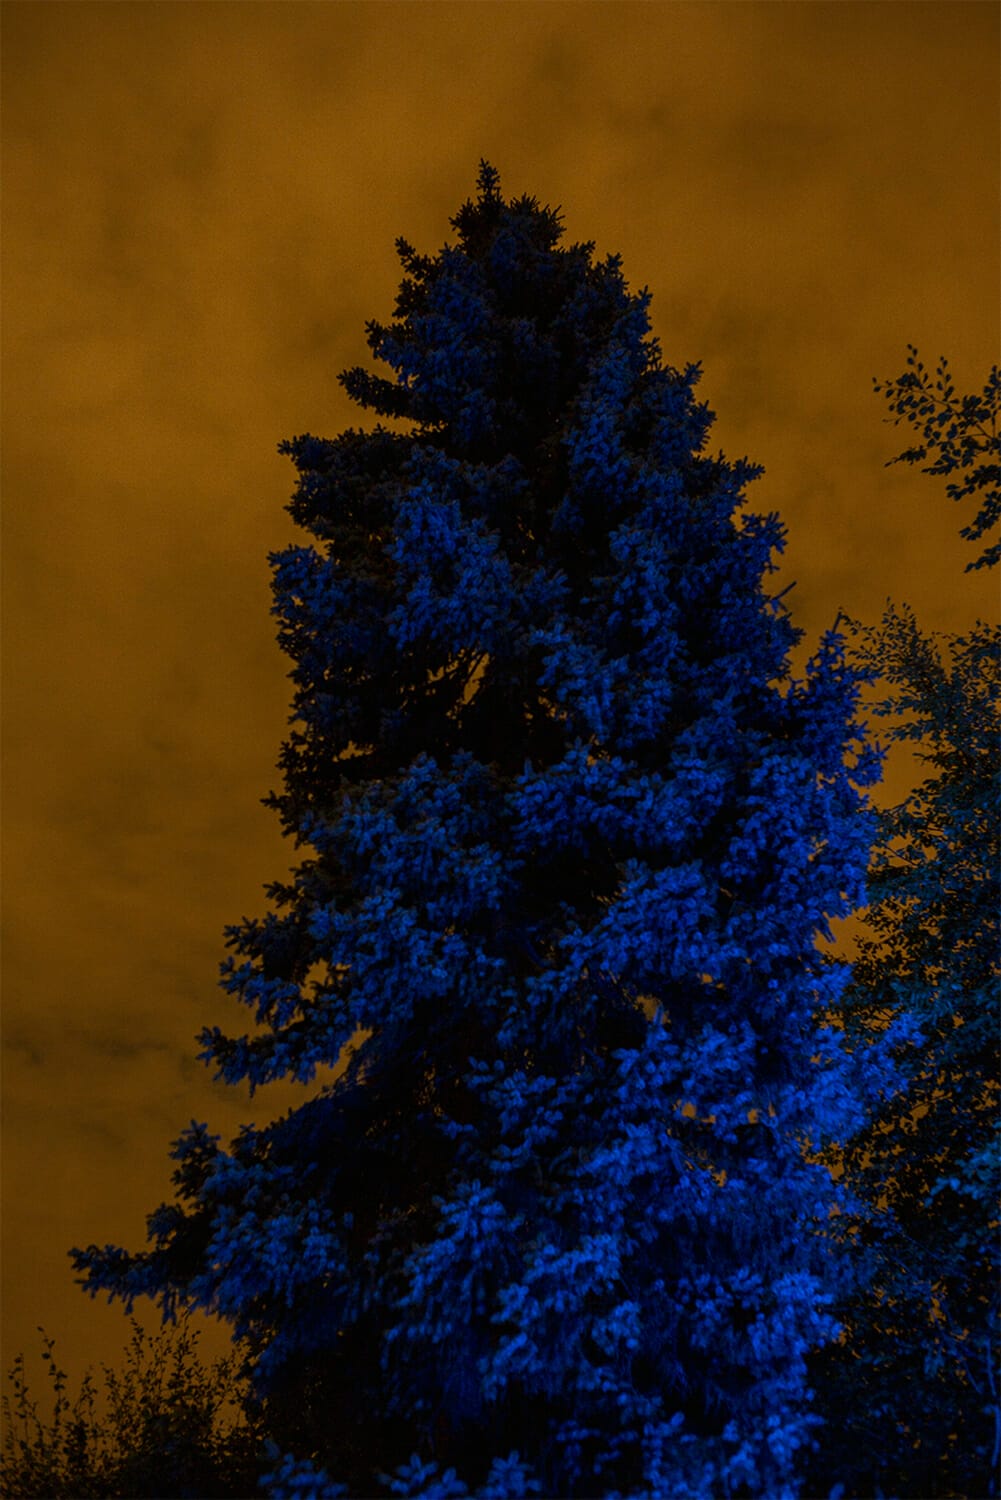 Giant blue tree in deep orange sky